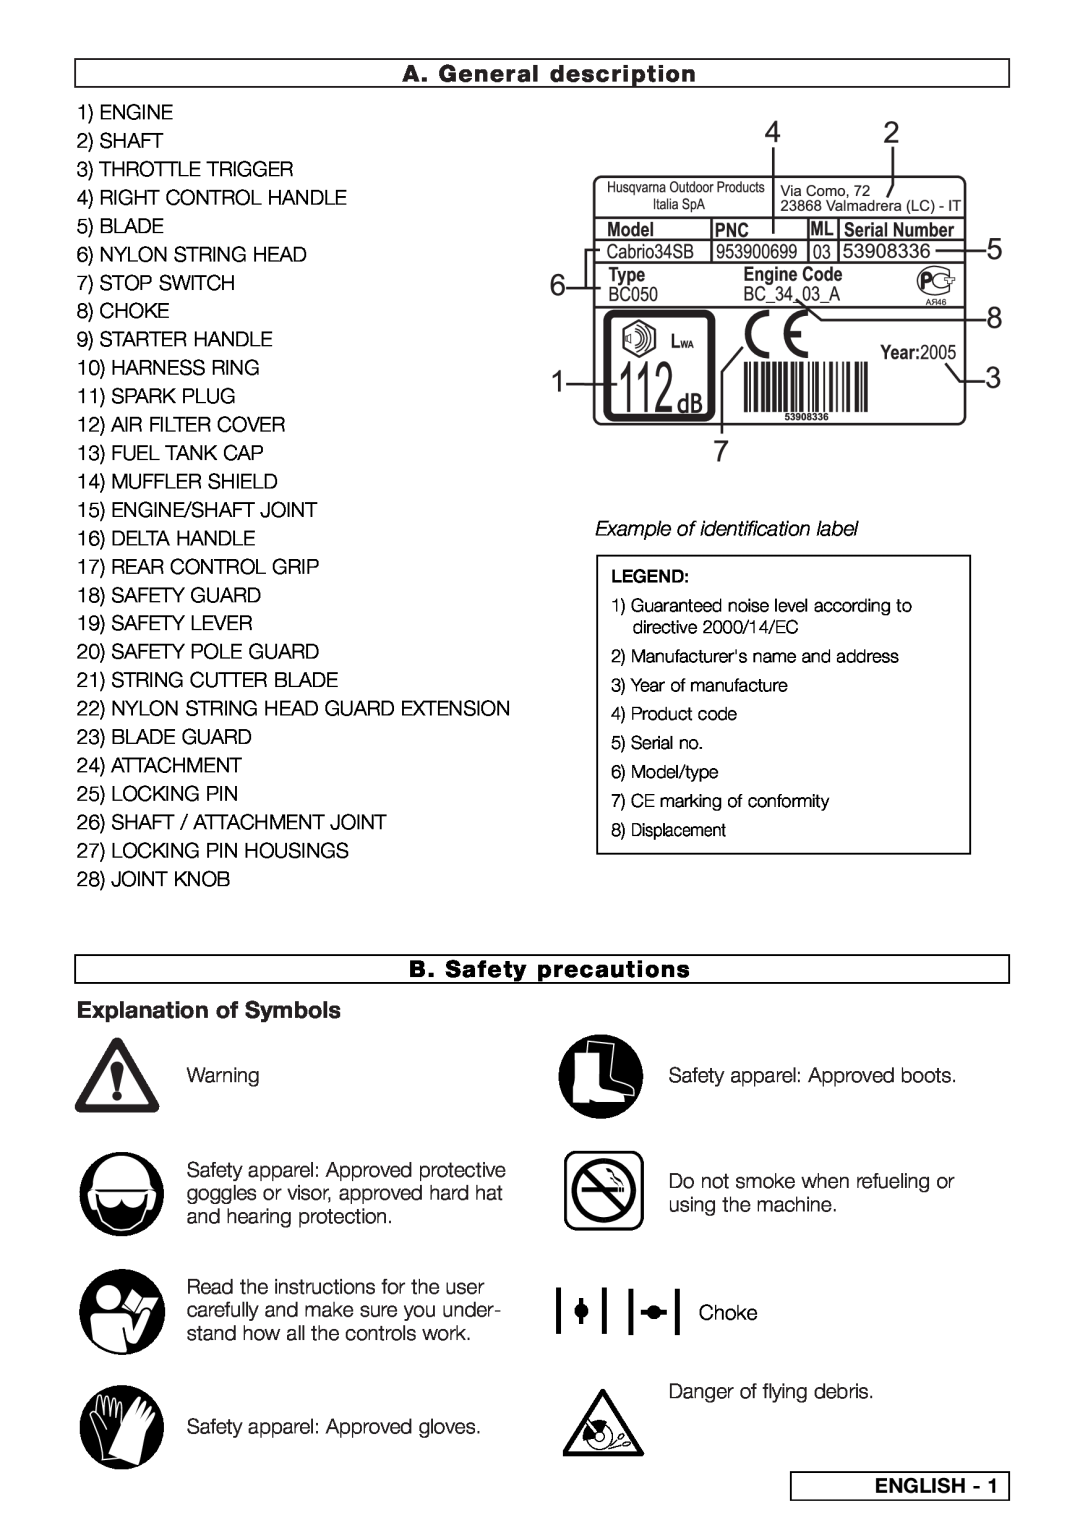 McCulloch 953900100 A. General description, B. Safety precautions Explanation of Symbols, Example of identification label 